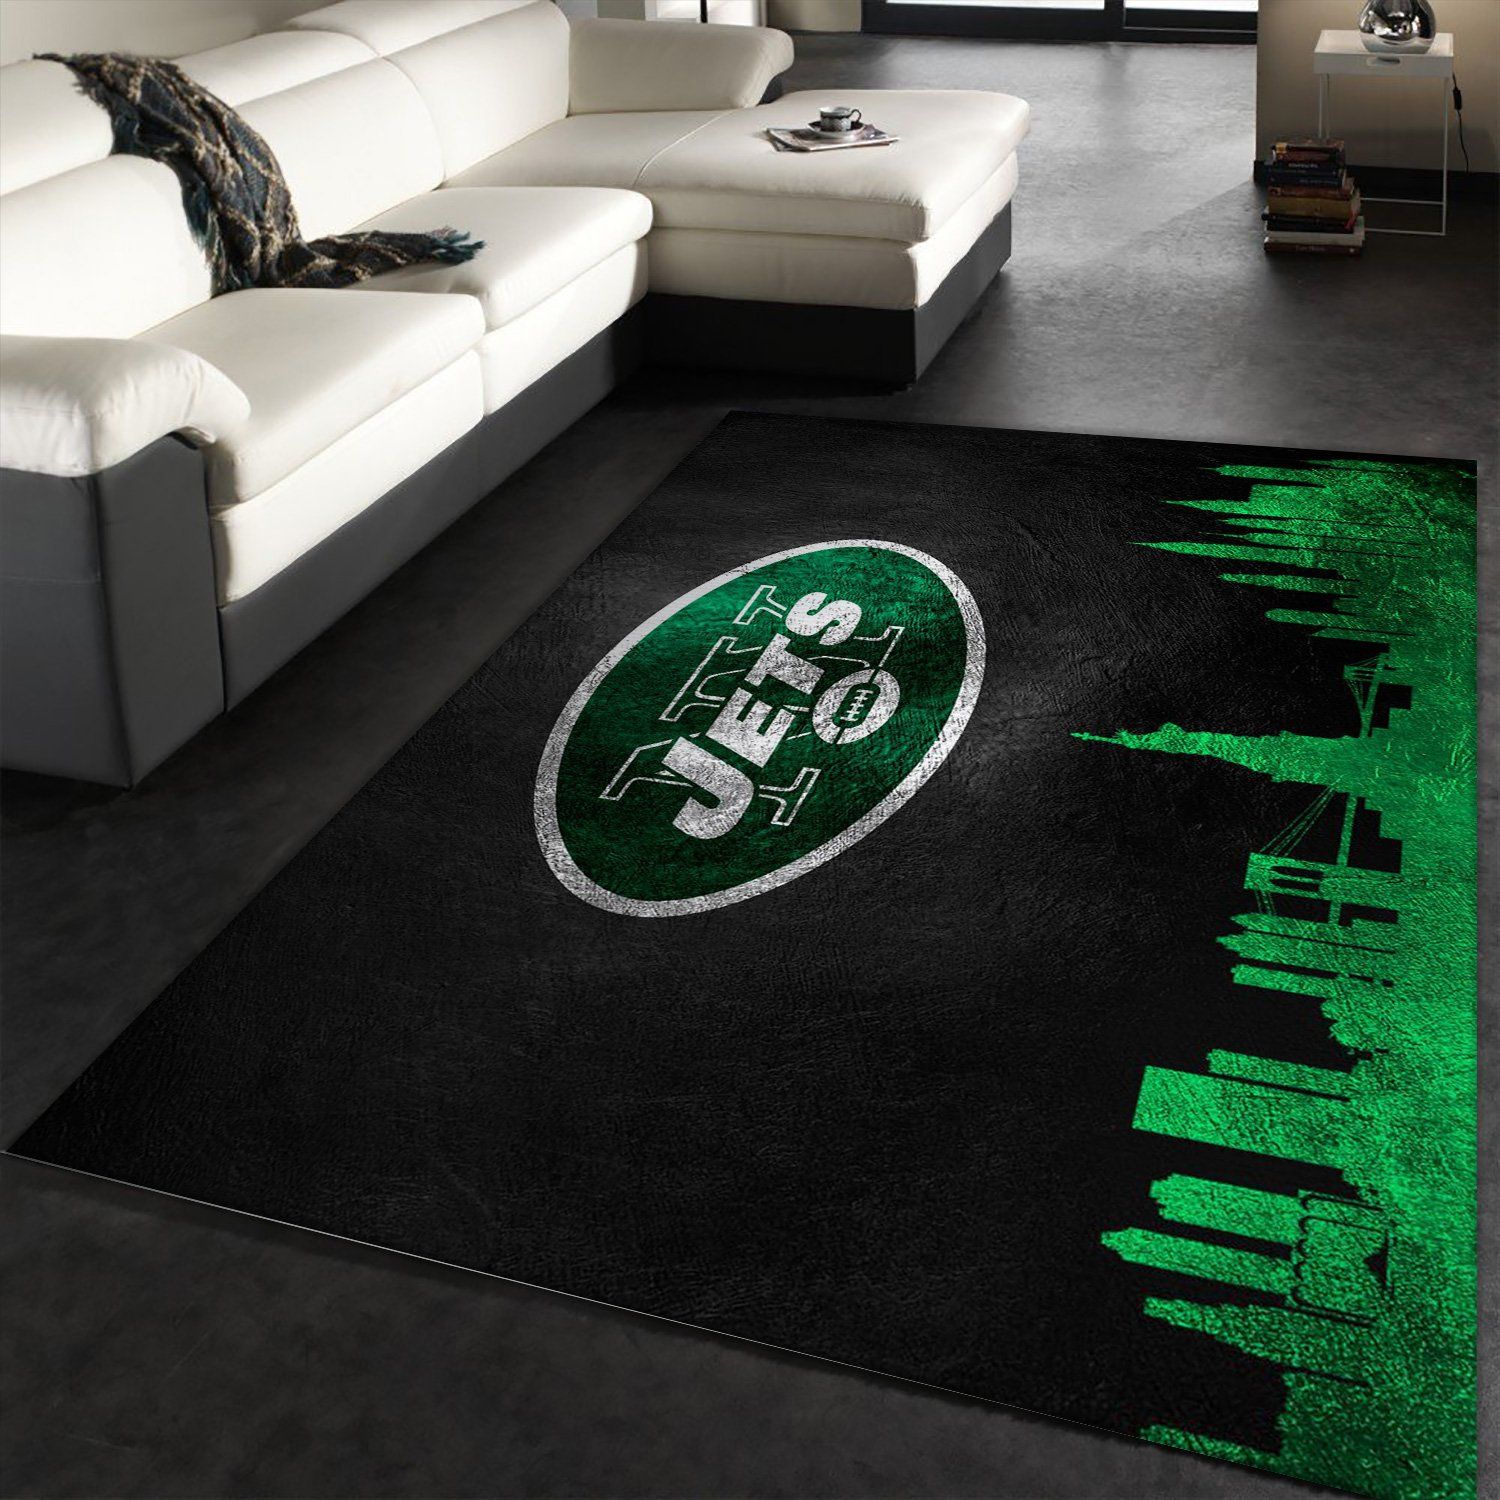 New York Jets Area Rugs Living Room Carpet Christmas Gift Floor